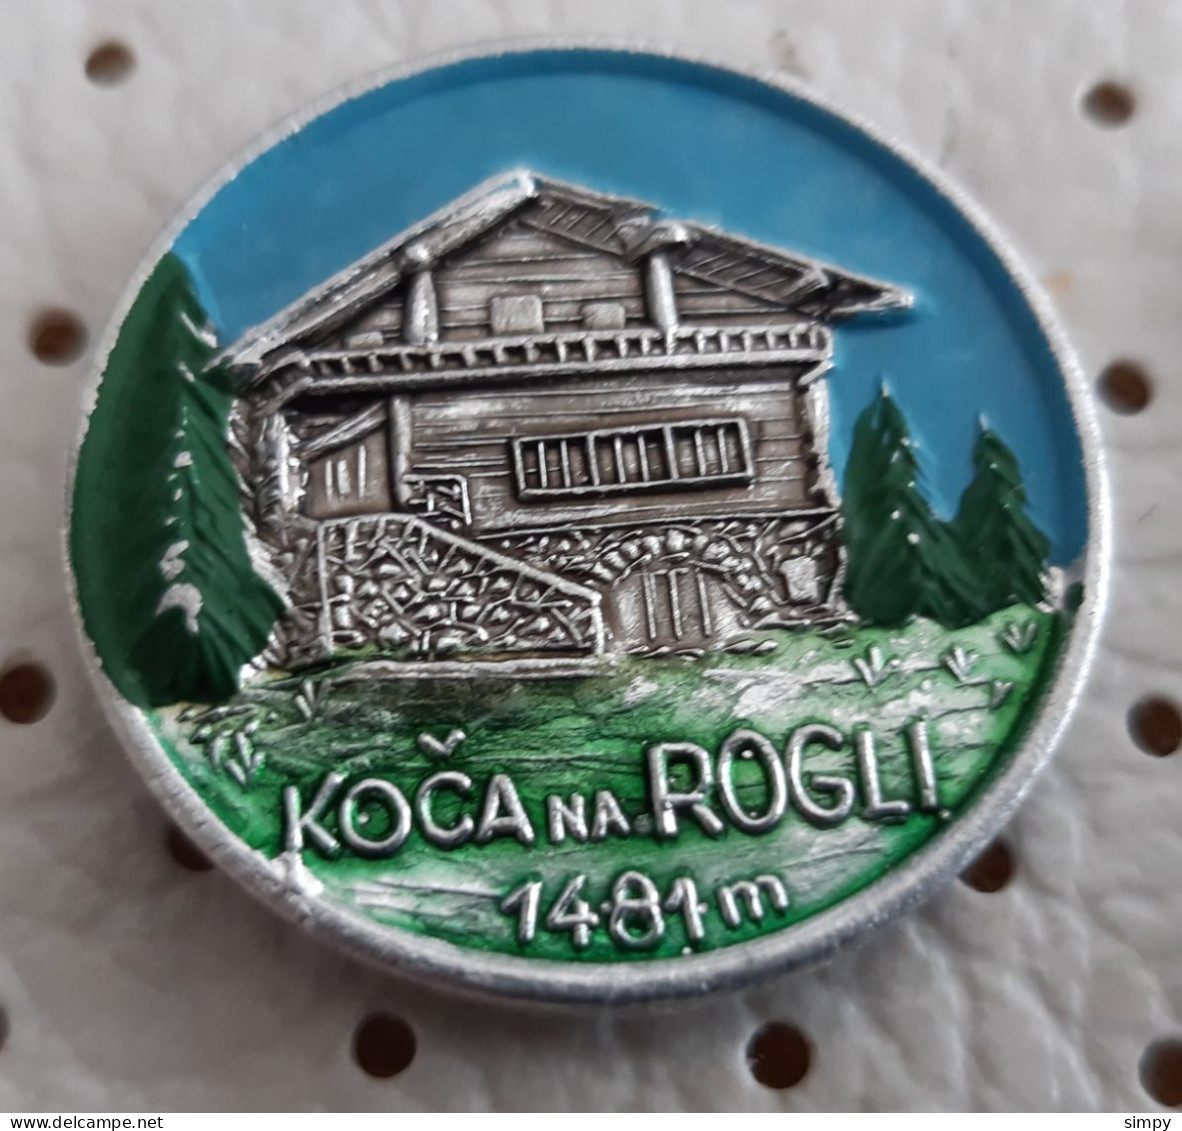 ROGLA 1481m  Mountain Lodge Ski Resort  Alpinism, Mountaineering Slovenia Pin - Alpinismo, Escalada